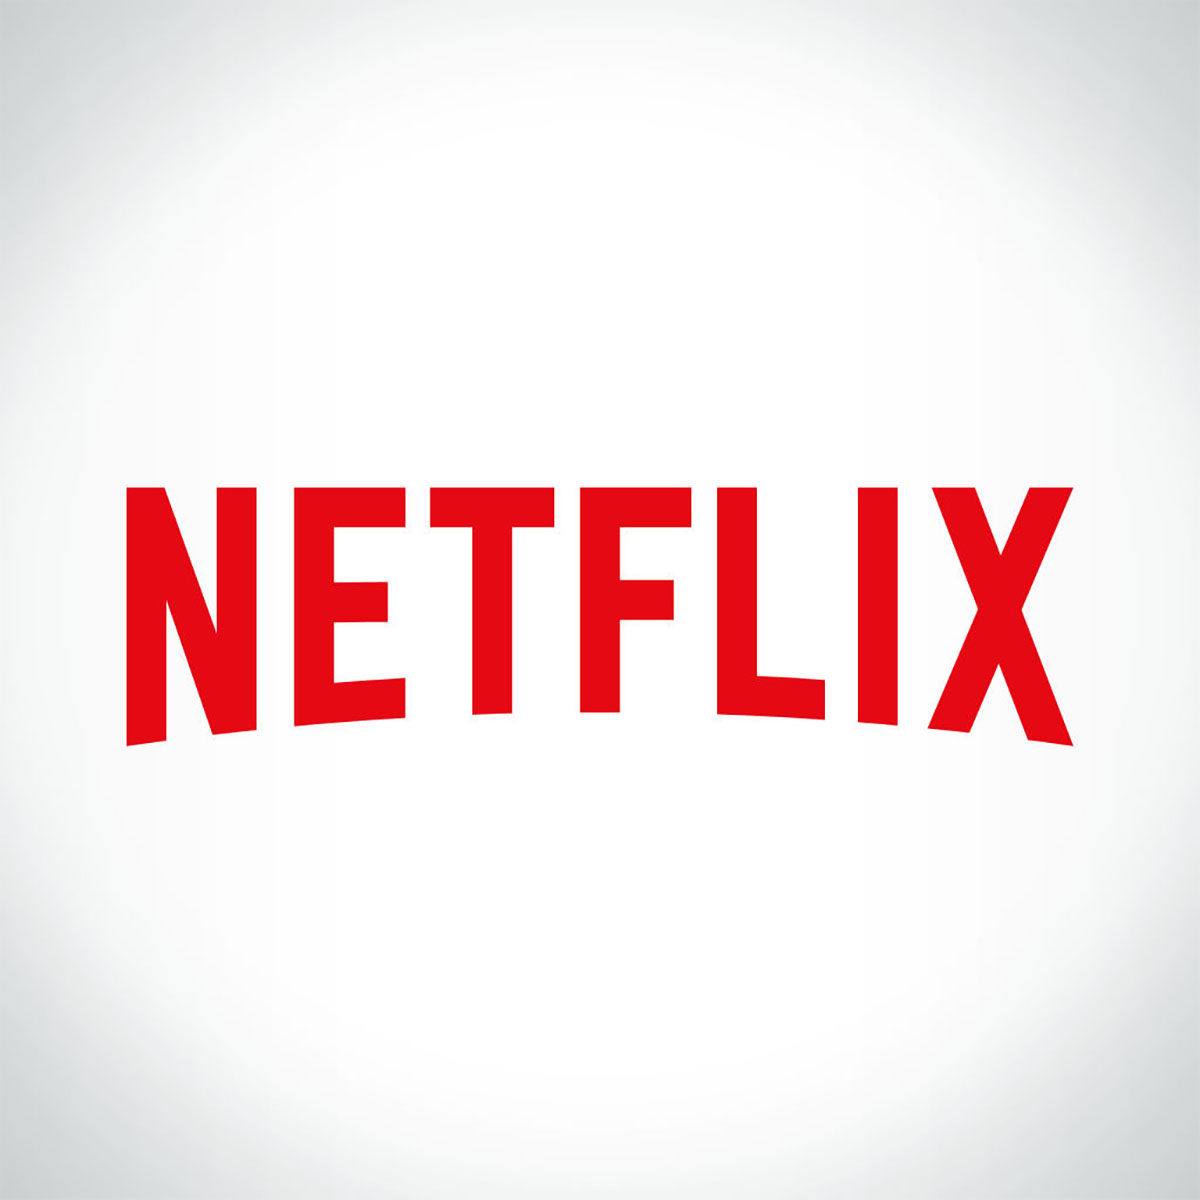 Image: The Netflix logo. Photo courtesy of Netflix (http://is4.mzstatic.com/image/thumb/Purple69/v4/53/c8/ed/53c8ed98-db12-8037-2cc9-94ad47961410/source/1024x1024sr.jpg).